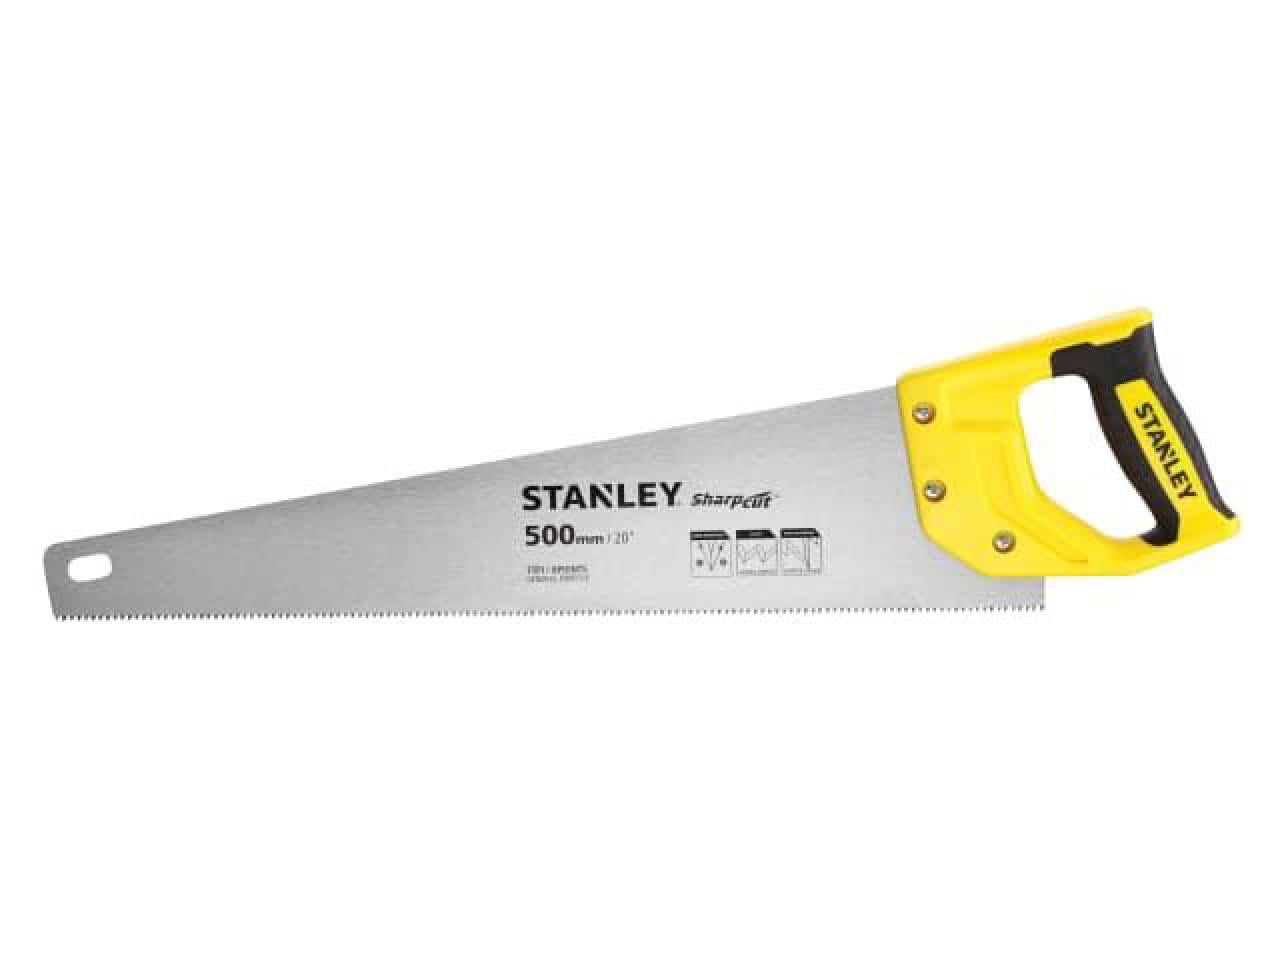 STANLEY - Sharpcut™ Handsaw 500mm (20in) 7 TPI